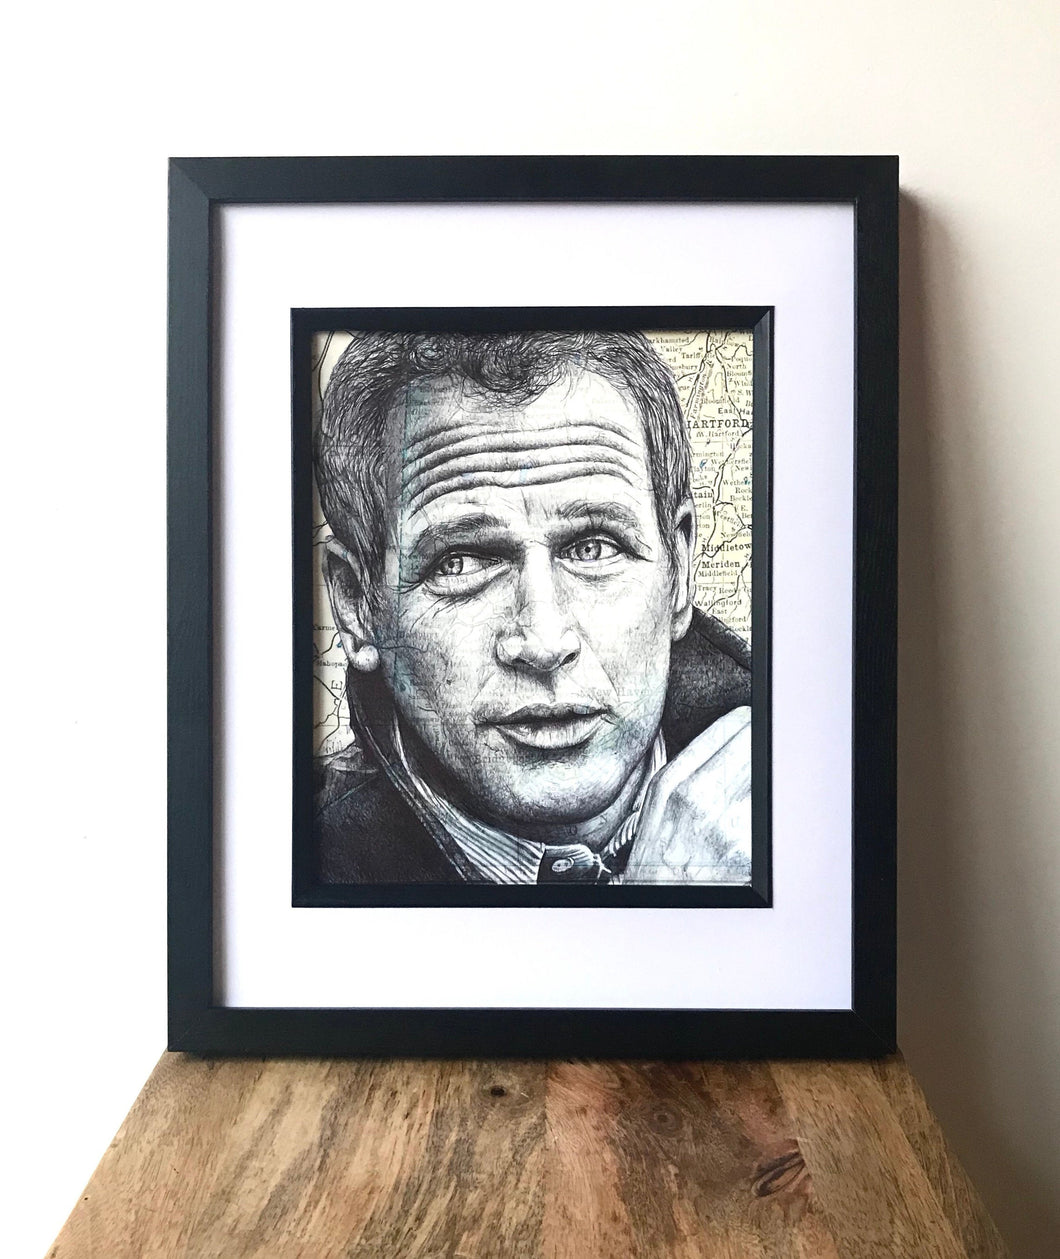 Paul Newman Portrait .Original signed pen drawing over map of Connecticut. Not a print. Unframed